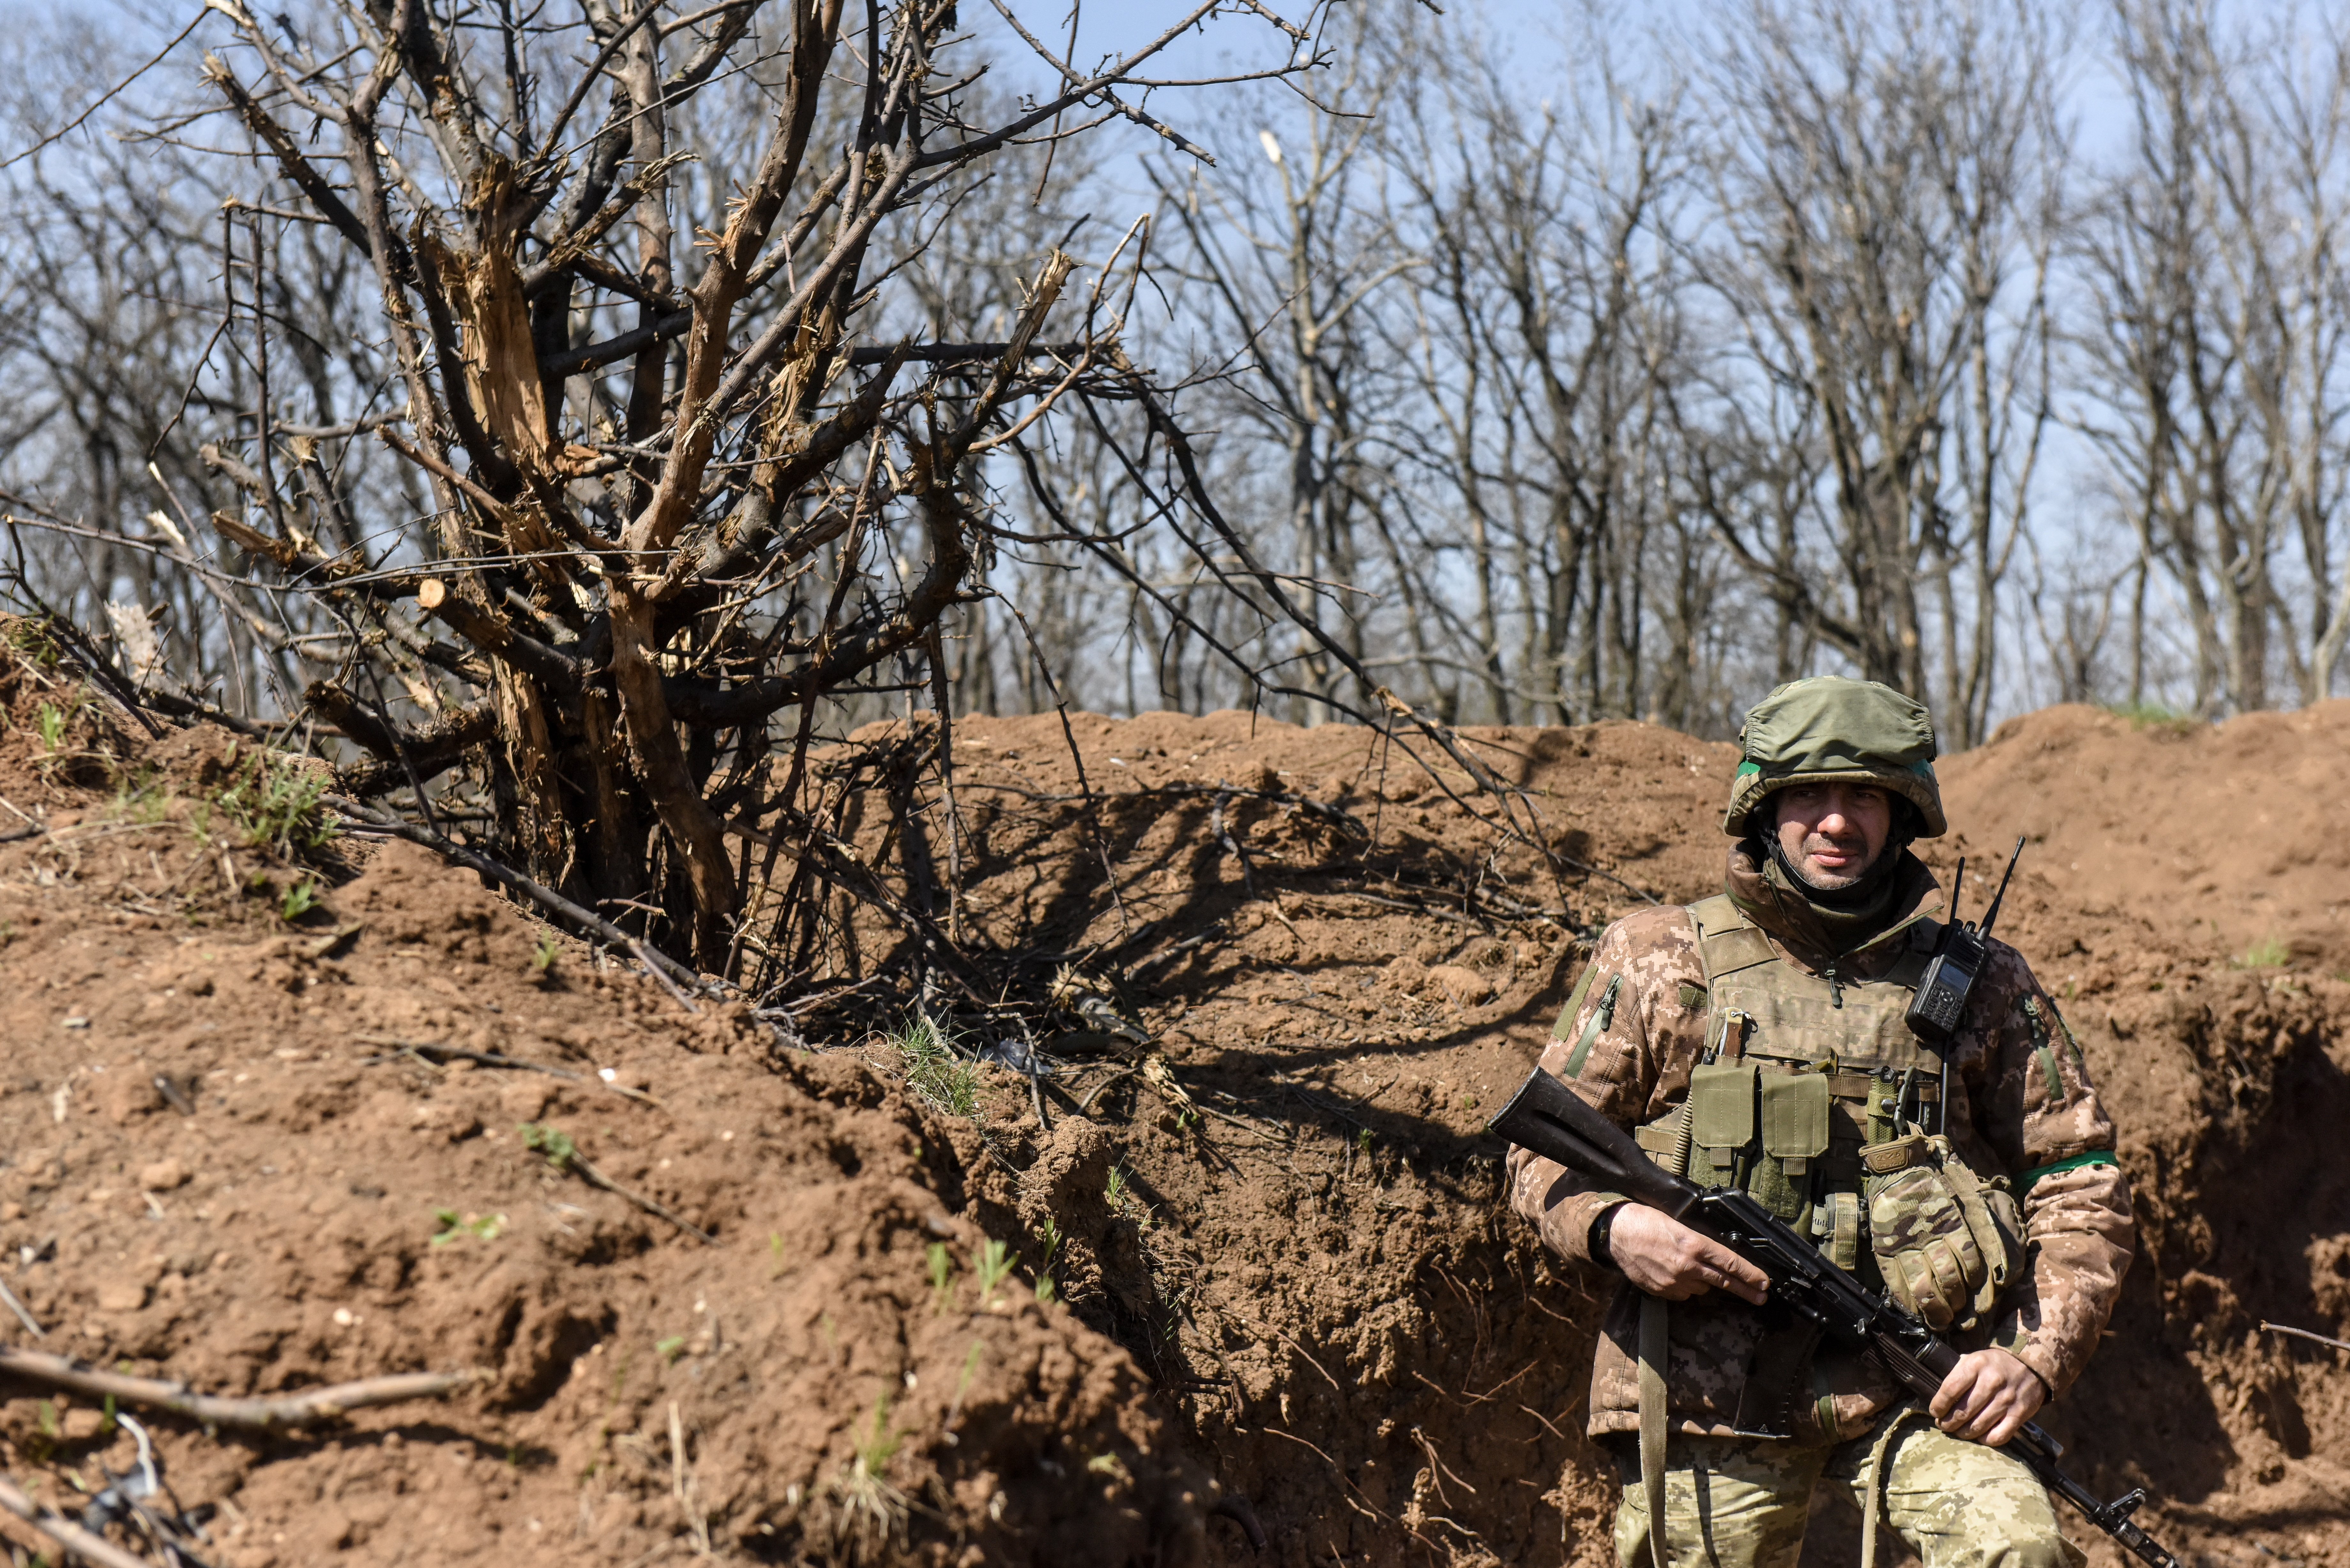 Gir inesperat i cop dur a Rússia: Sèrbia va acordar subministrar armes a Ucraïna